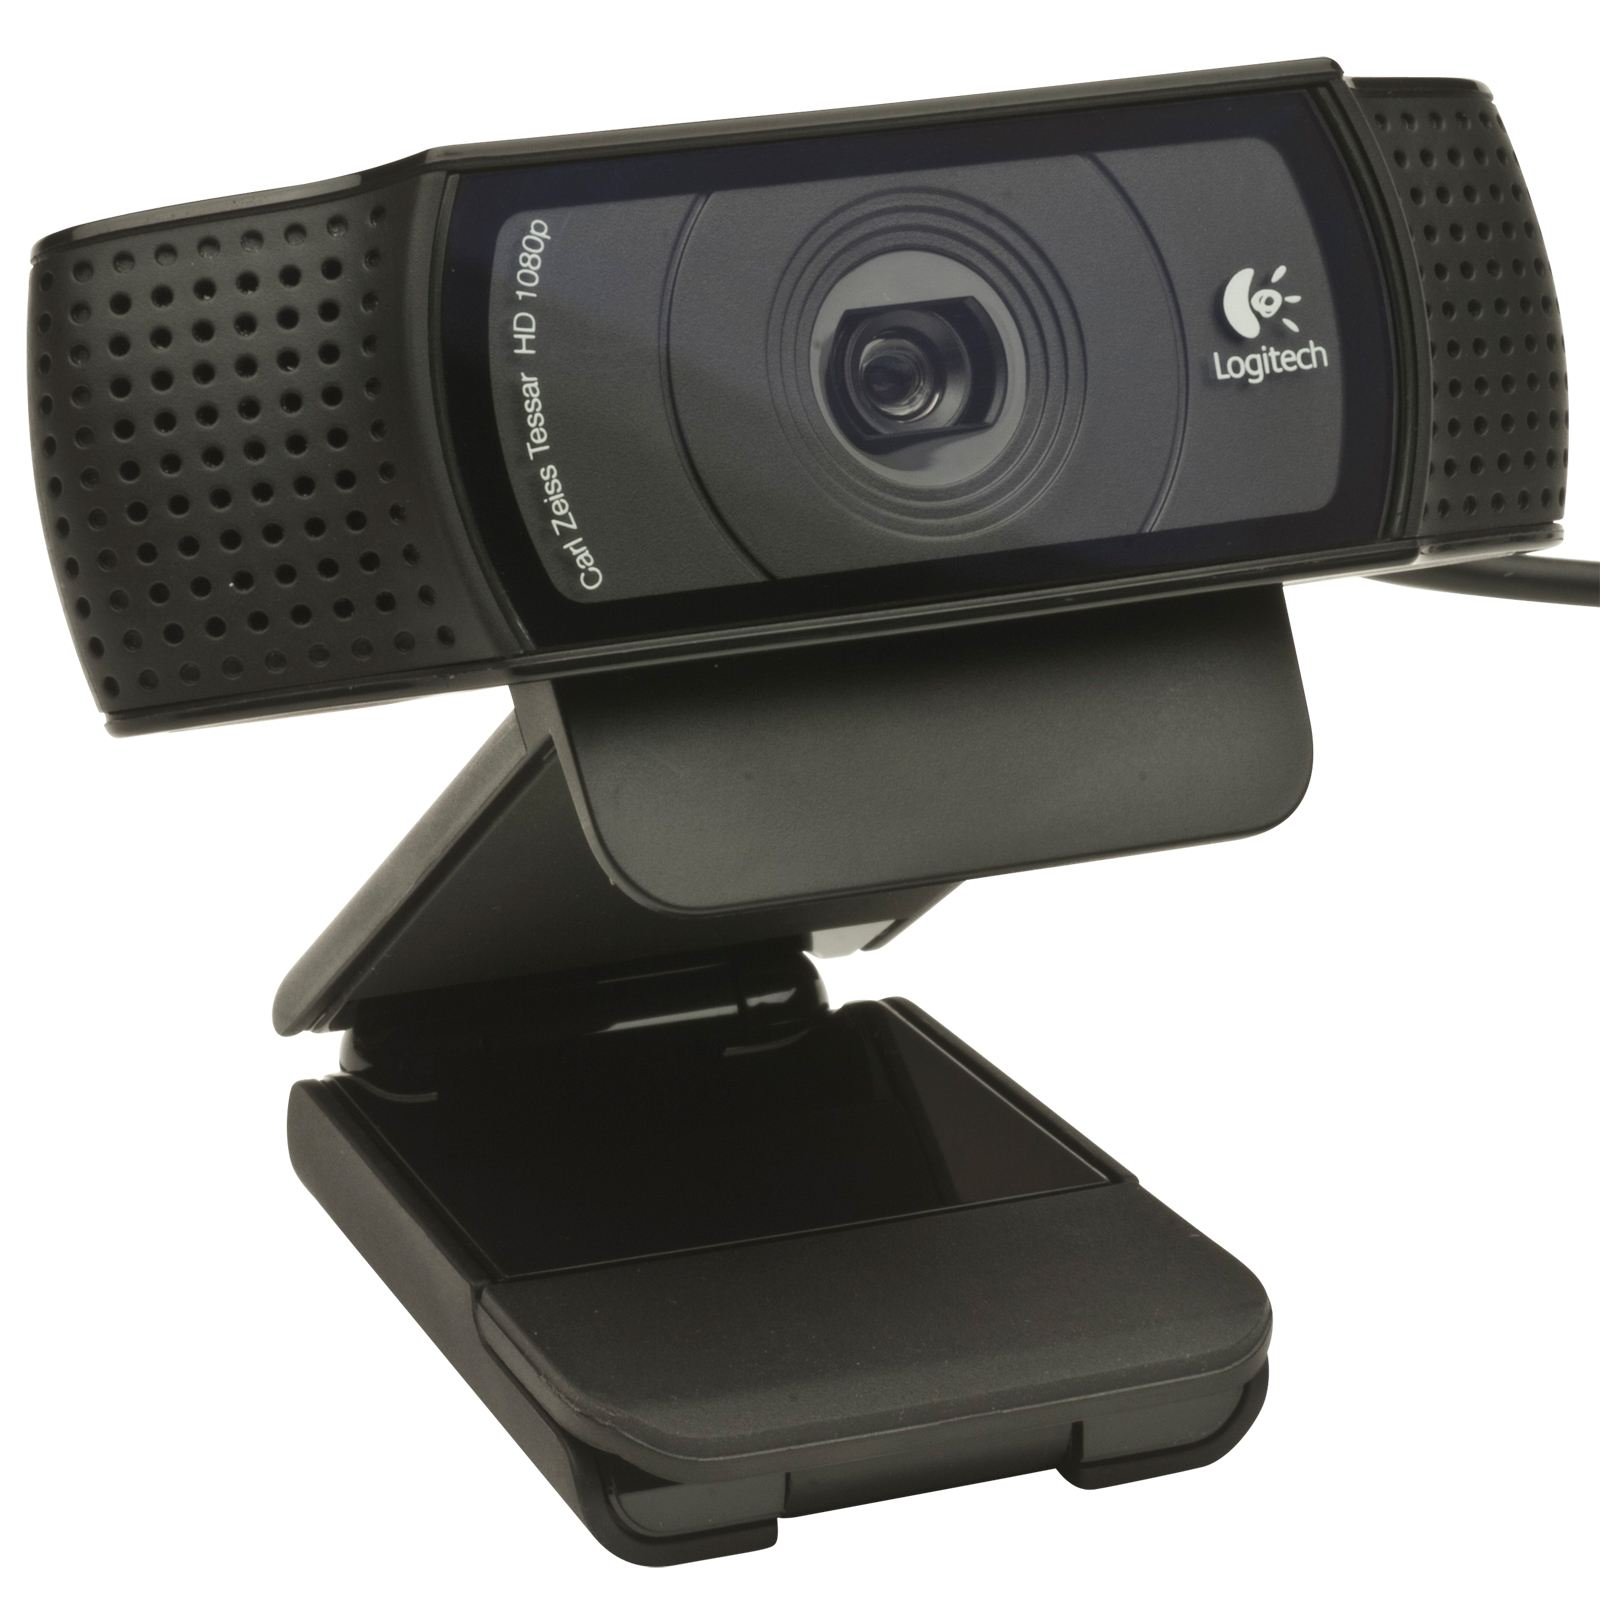 Digital Web Camera Logitech HD Pro WebCam C9201